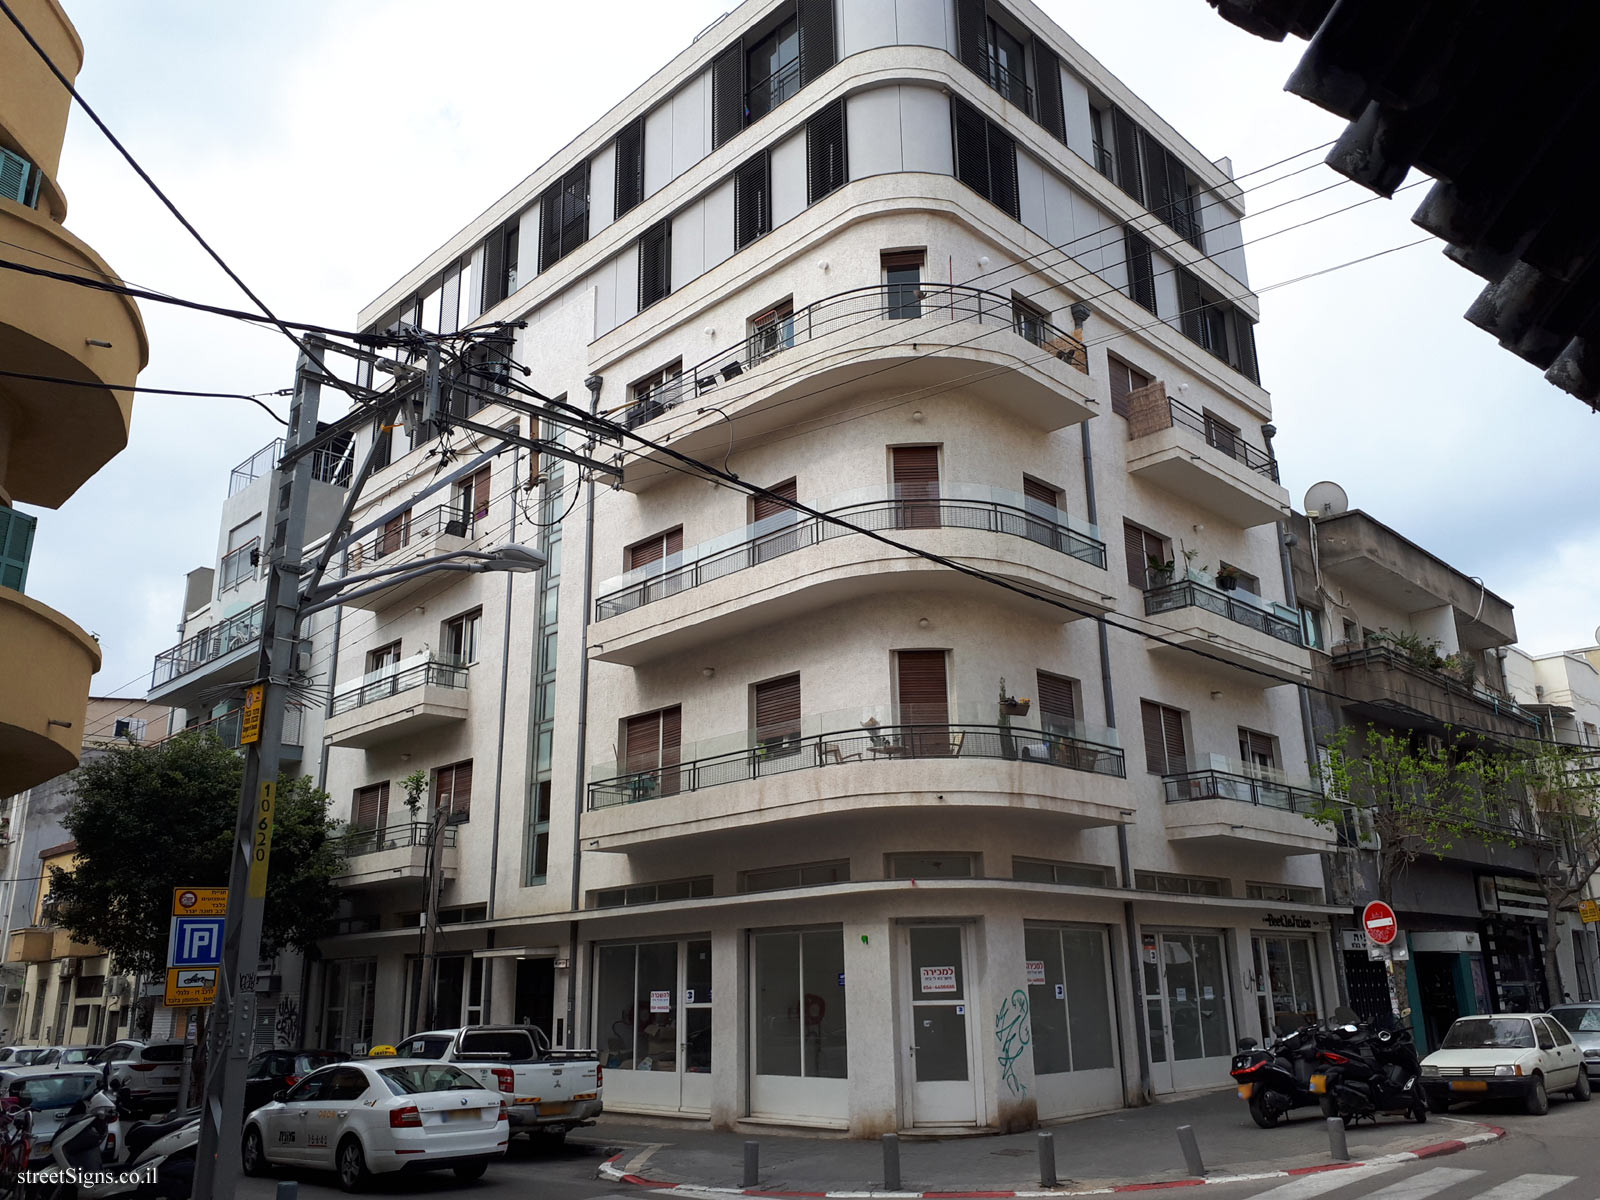 Tel Aviv - buildings for conservation - 48 HaKishon